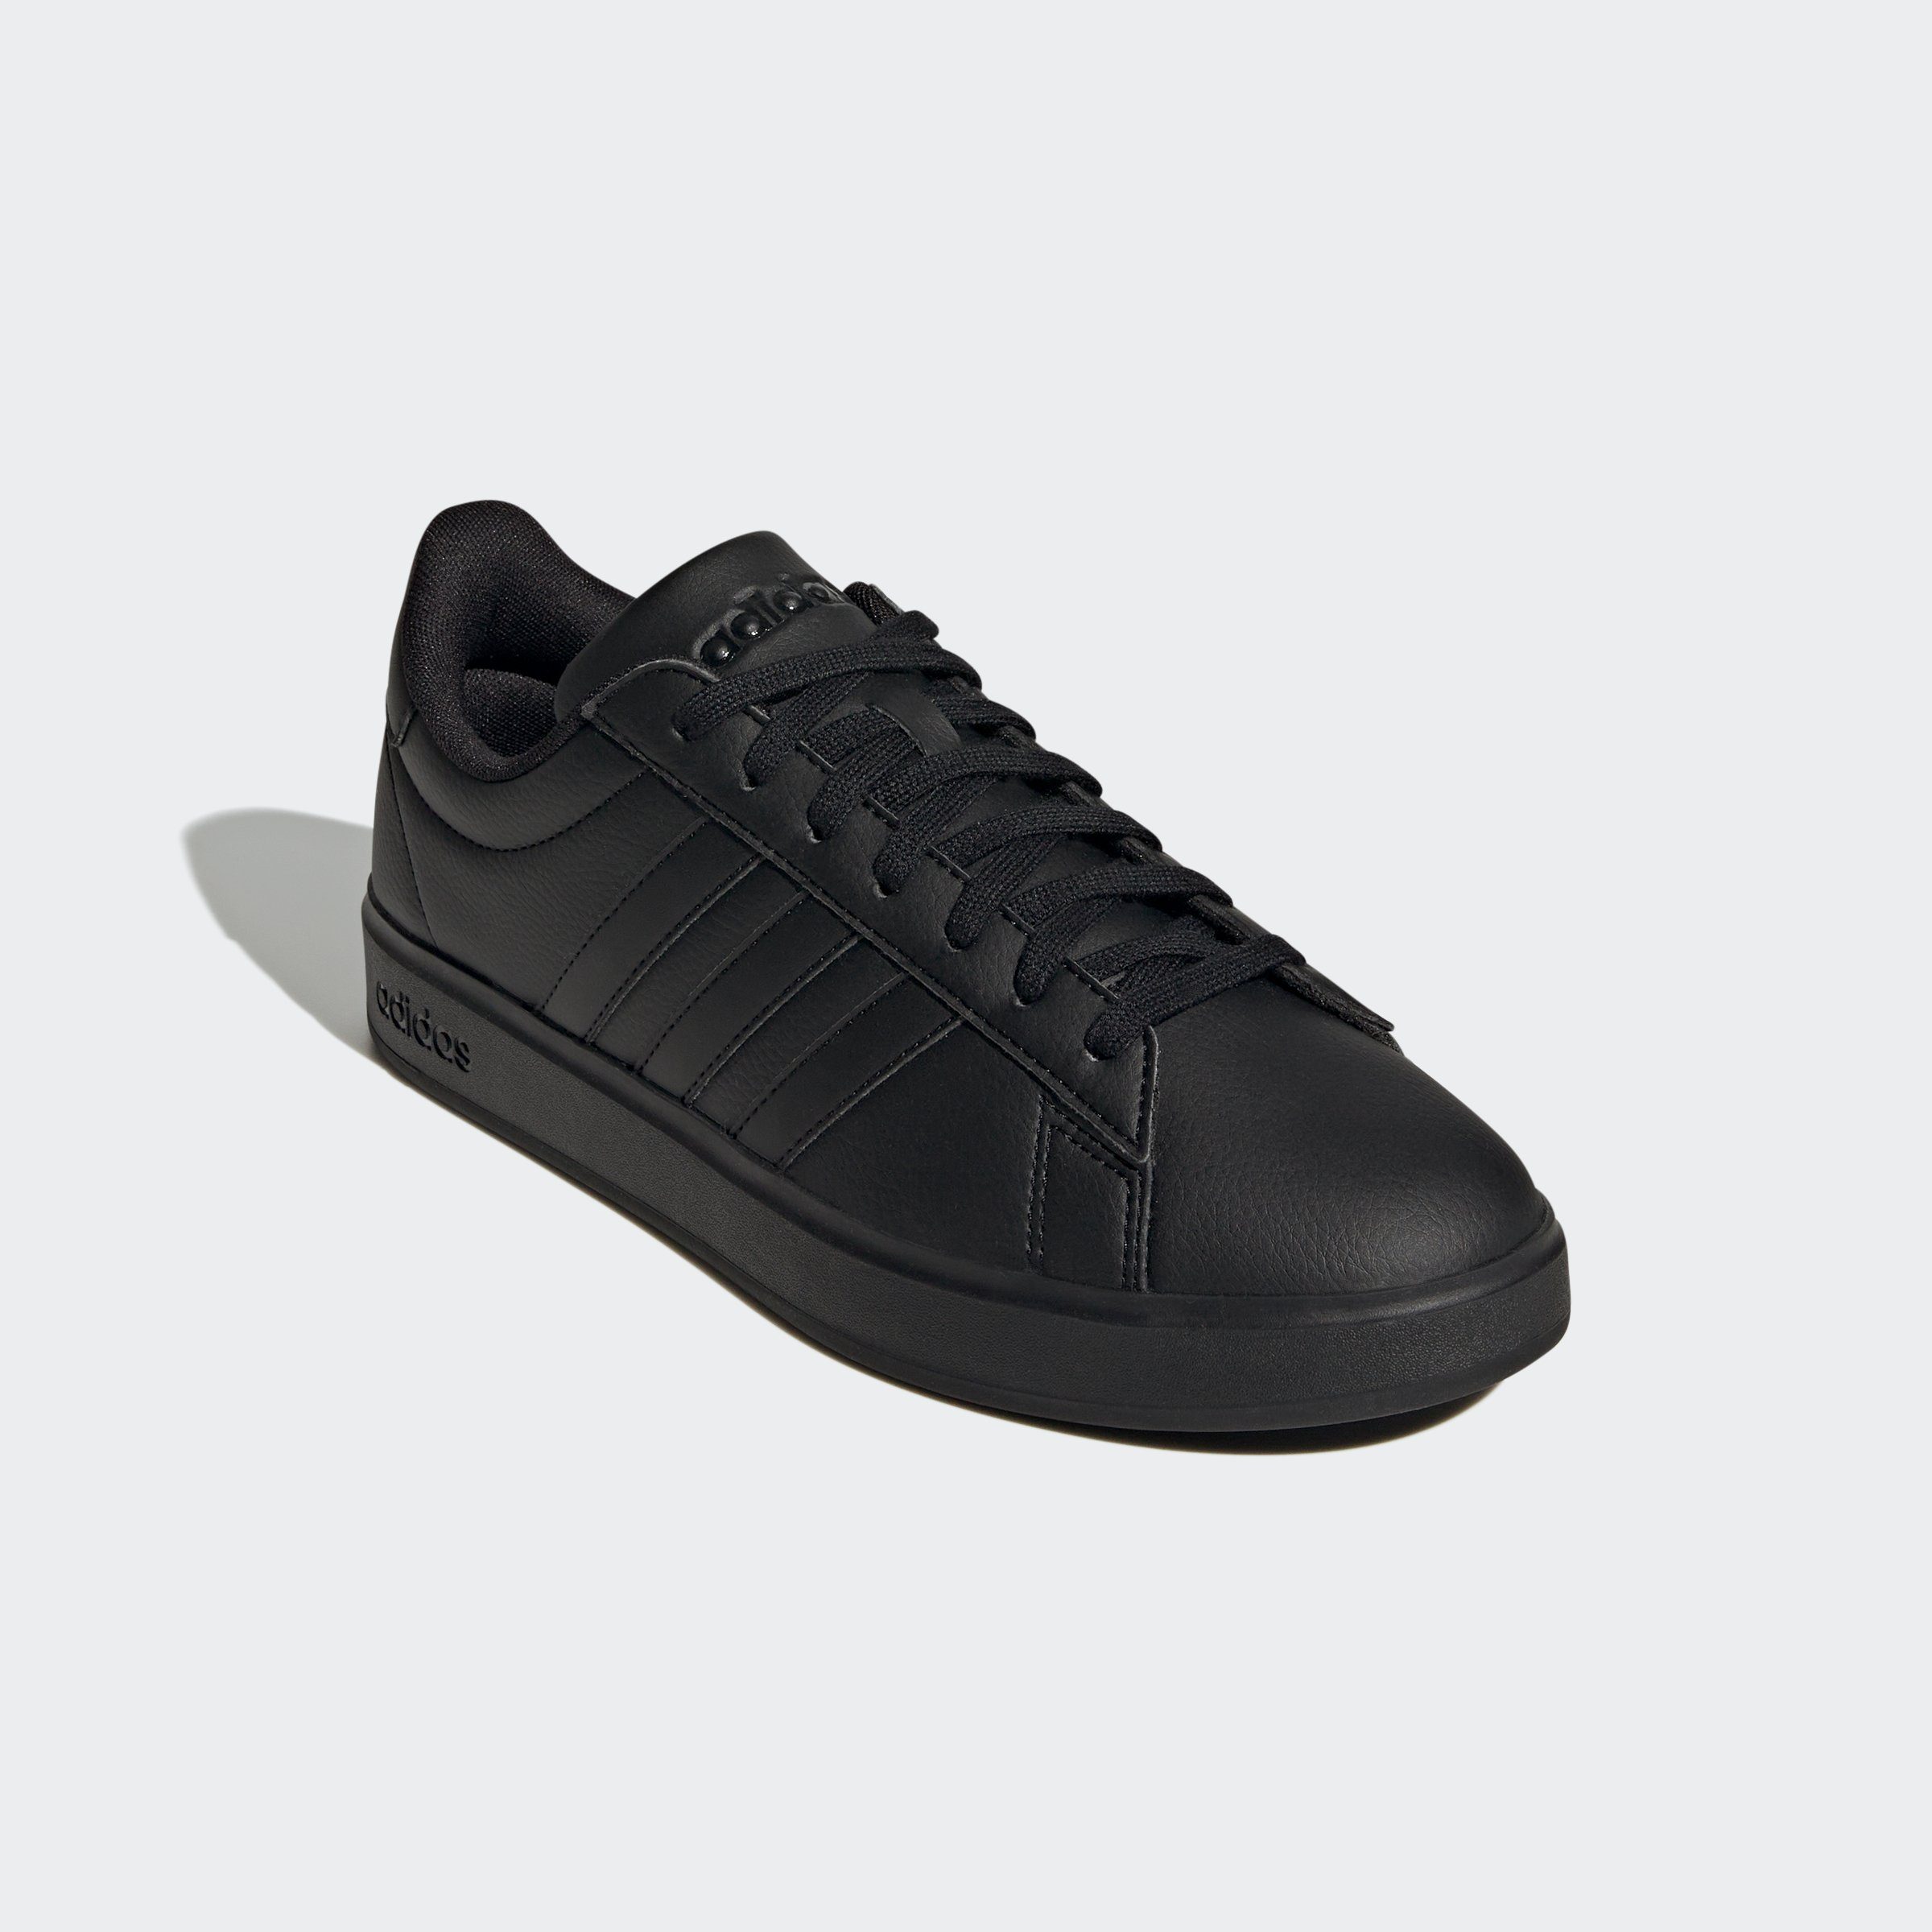 des Sportswear GRAND / Cloud White COURT COMFORT Sneaker Core den Core adidas auf Spuren Design Superstar adidas CLOUDFOAM Black Black /